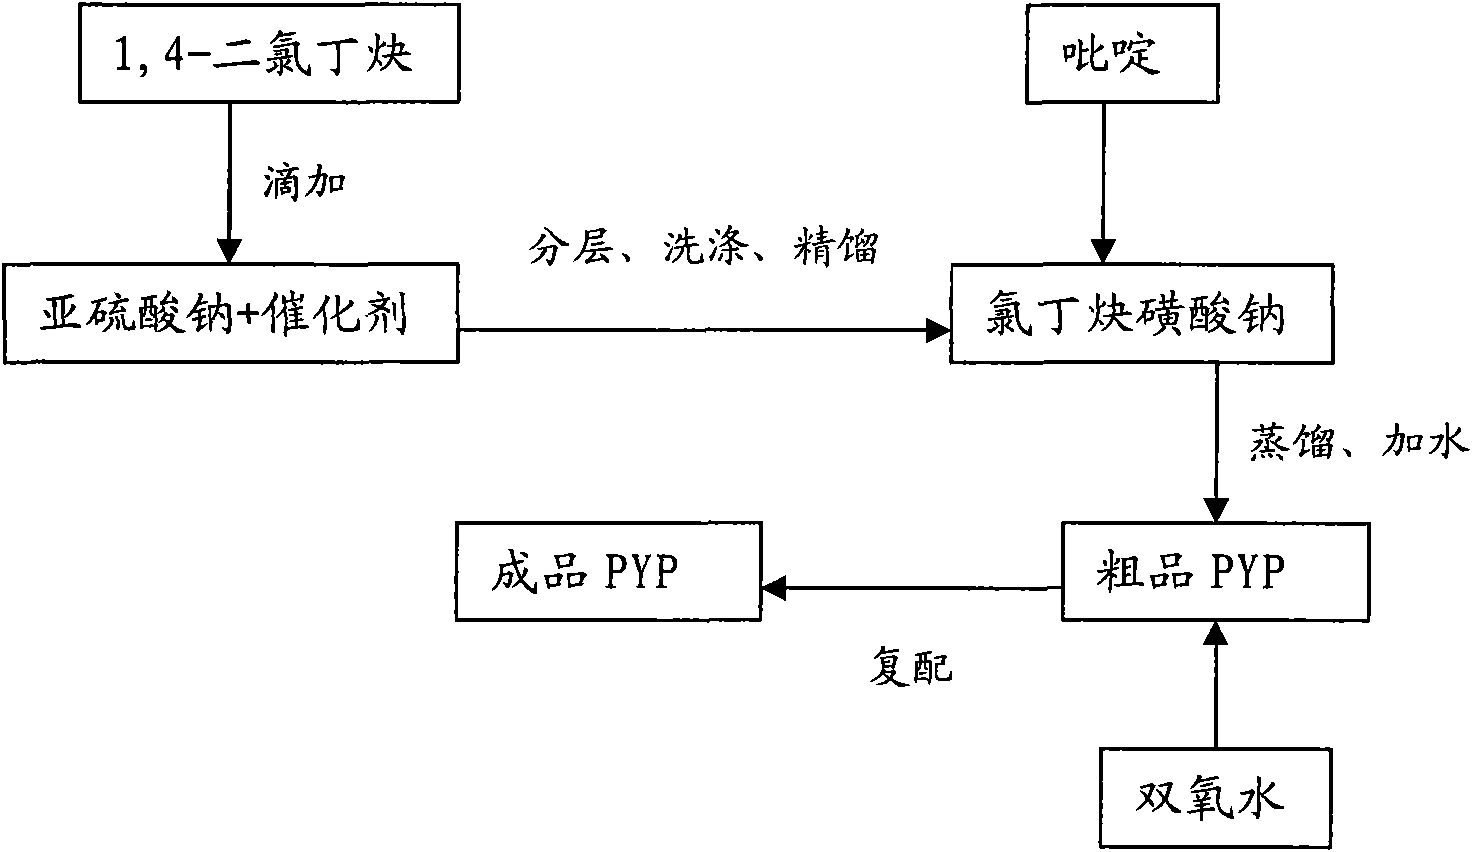 Preparation method of PYP